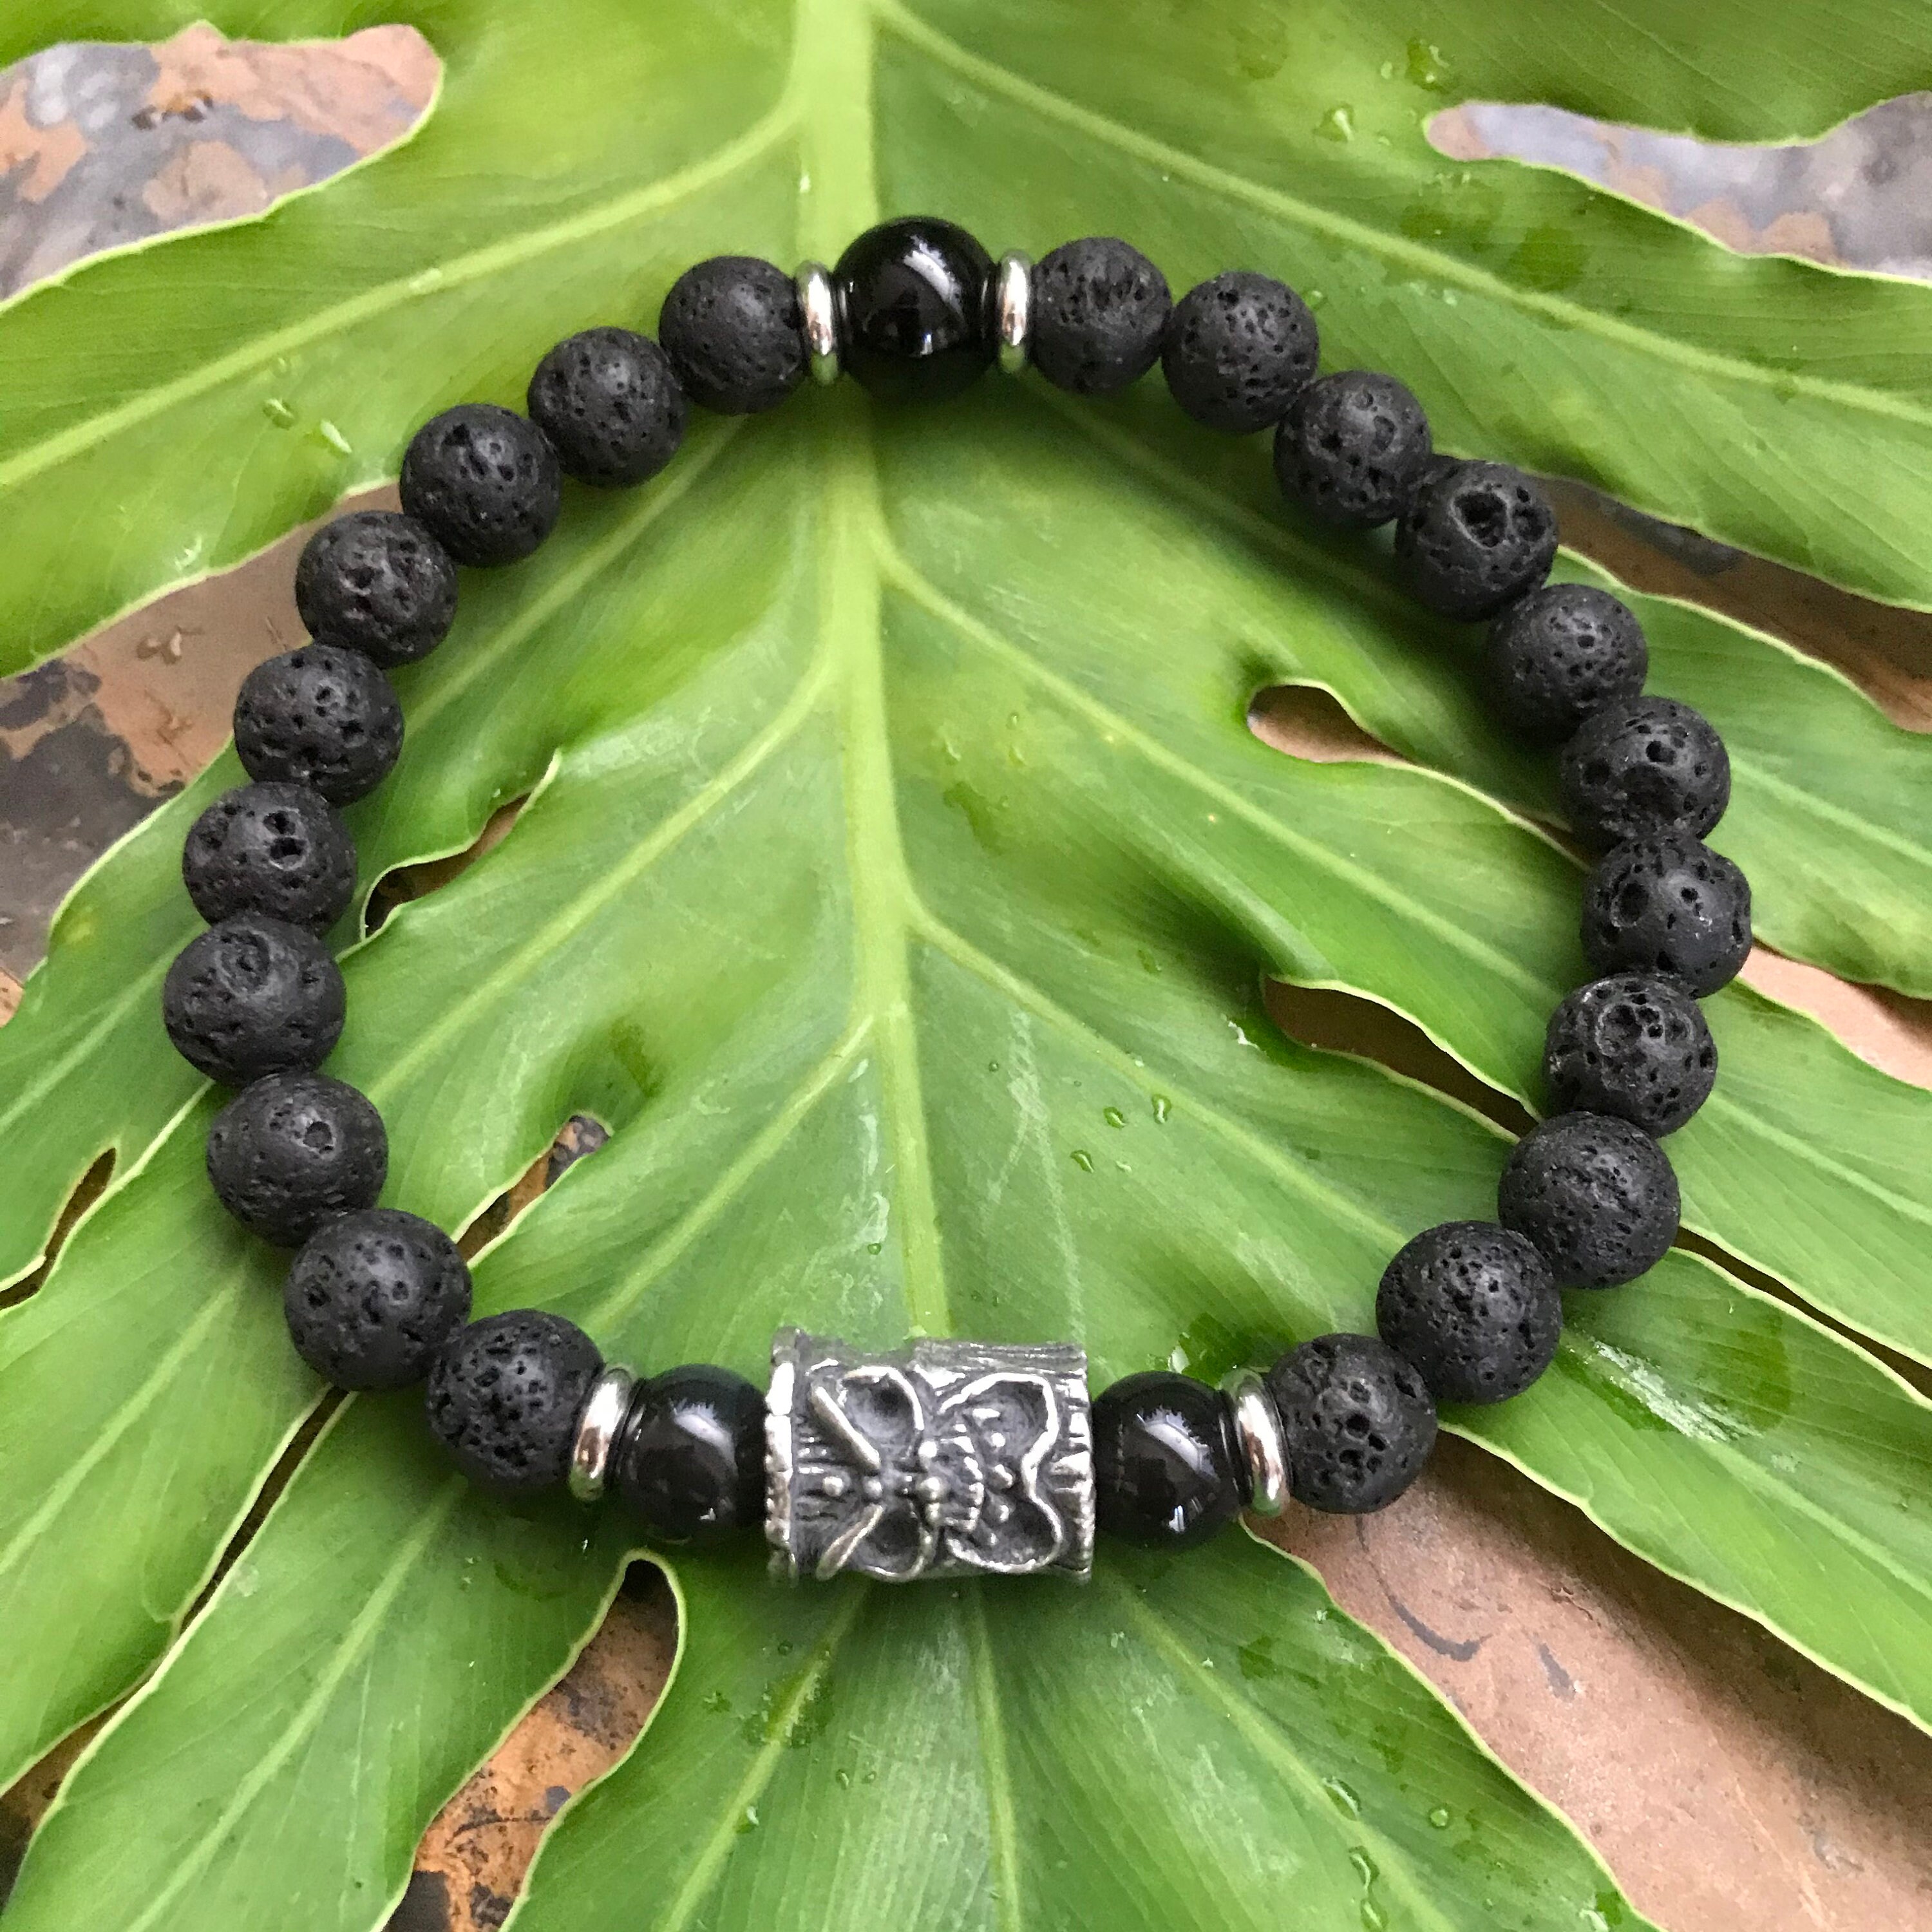 Original Chakra Infused Buddha Bracelet with Spiritual Hematite Healing  Stones - Adjustable Sizing for Women, Men and Yogis - Earth Therapy : Maelo  Ruiz: Amazon.in: Jewellery